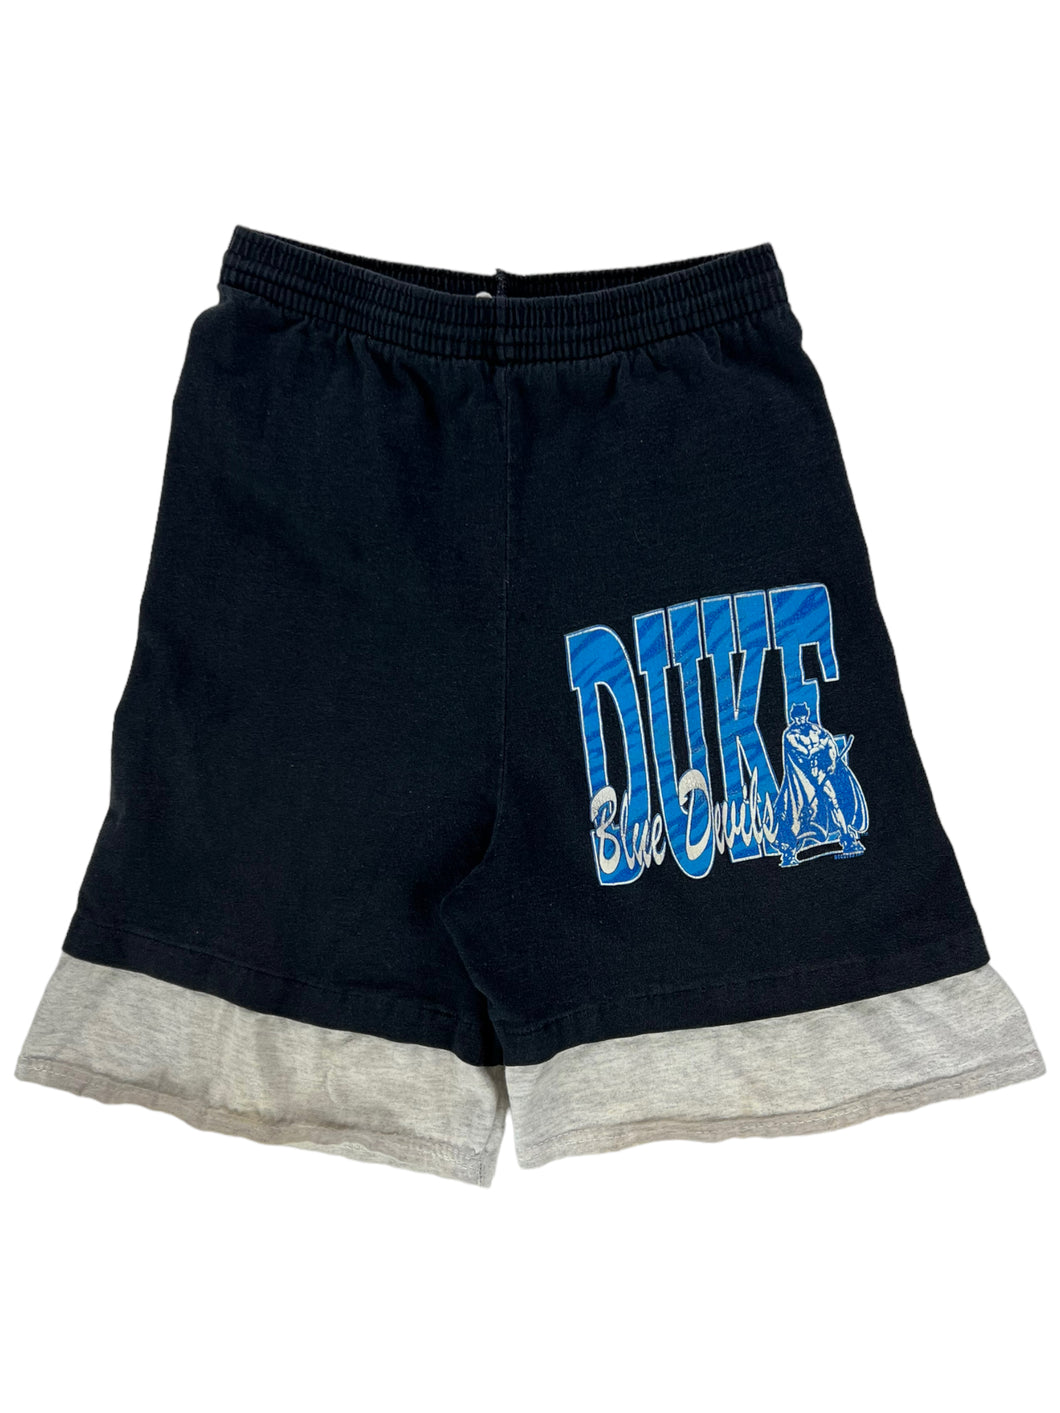 Vintage 90s Tultex Duke Blue Devils shorts (S)